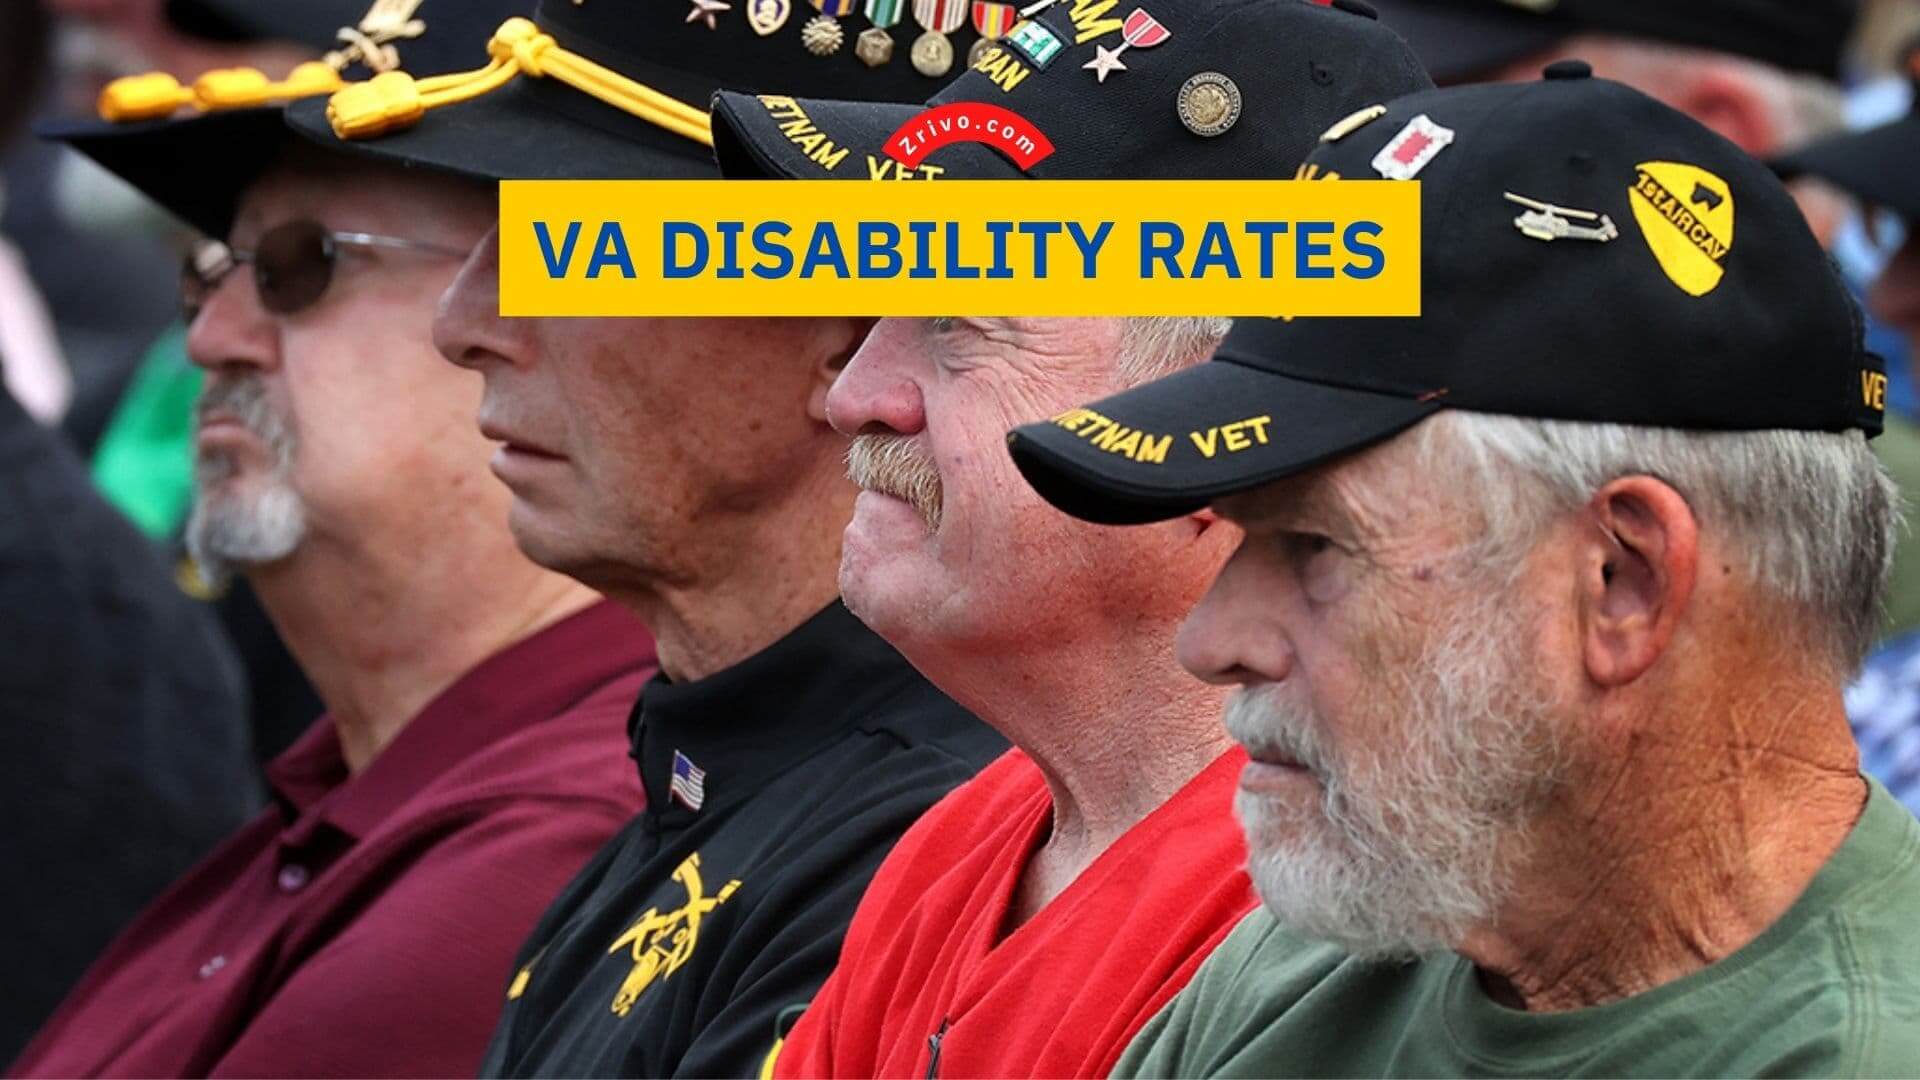 VA Disability Rates